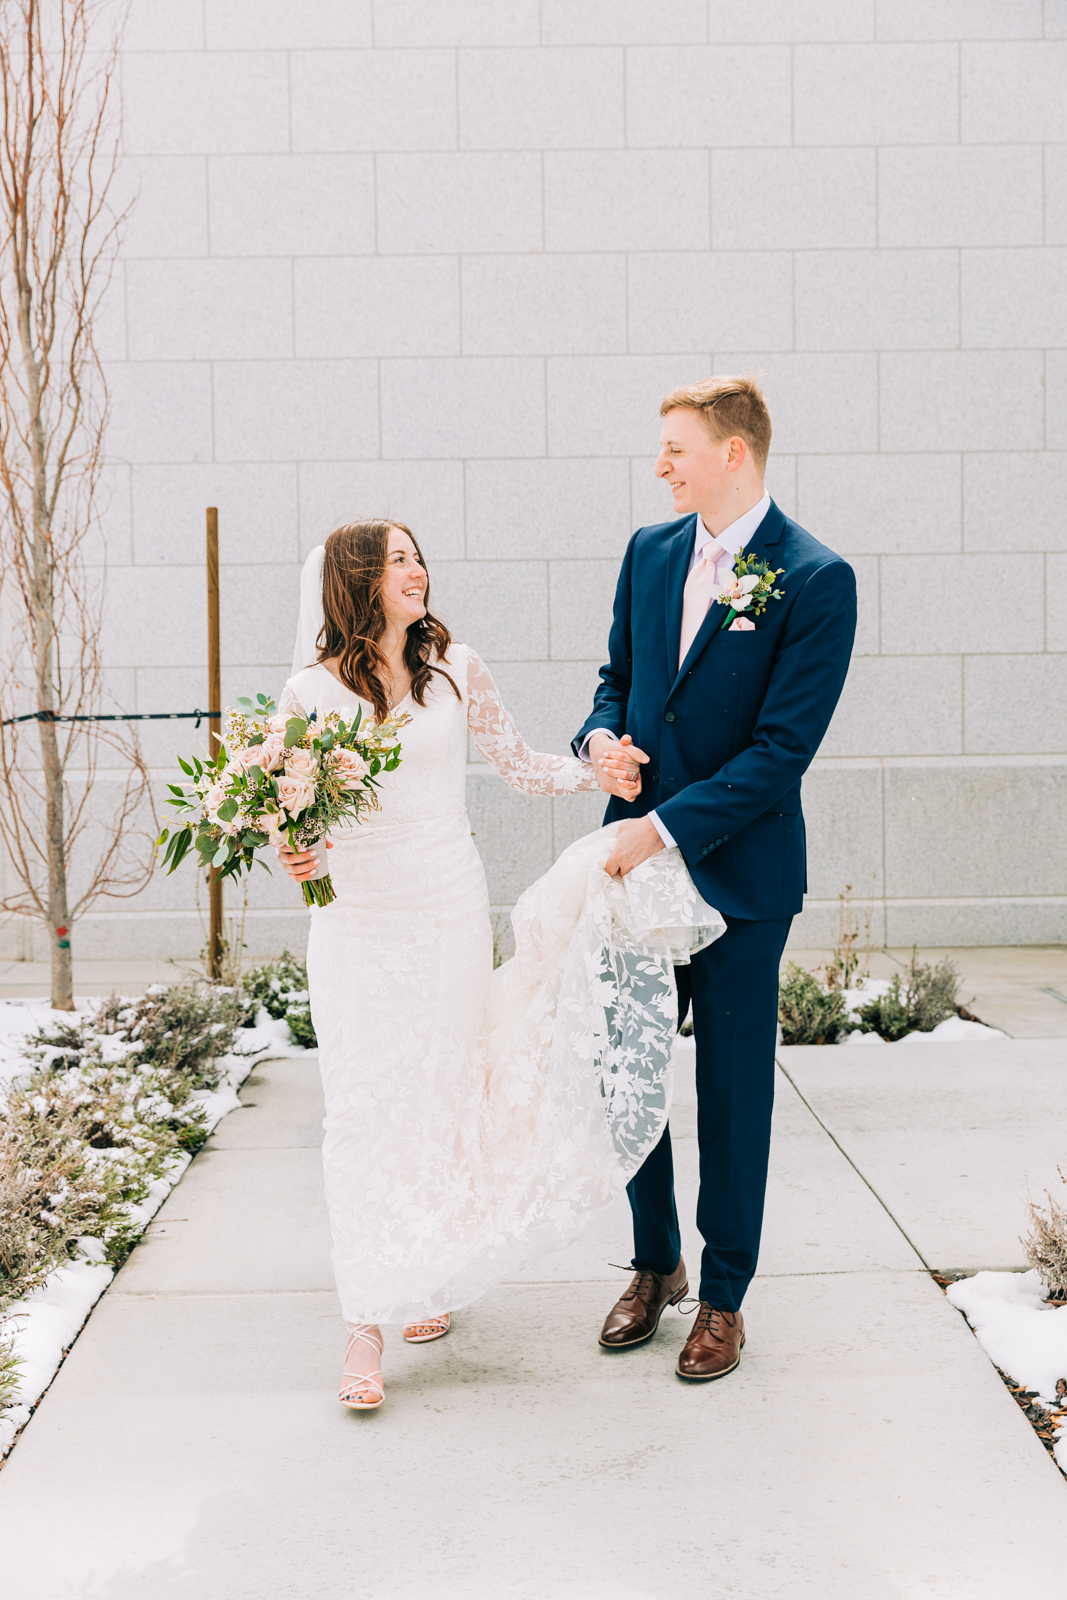 Jackson Hole wedding photographer captures groom helping bride